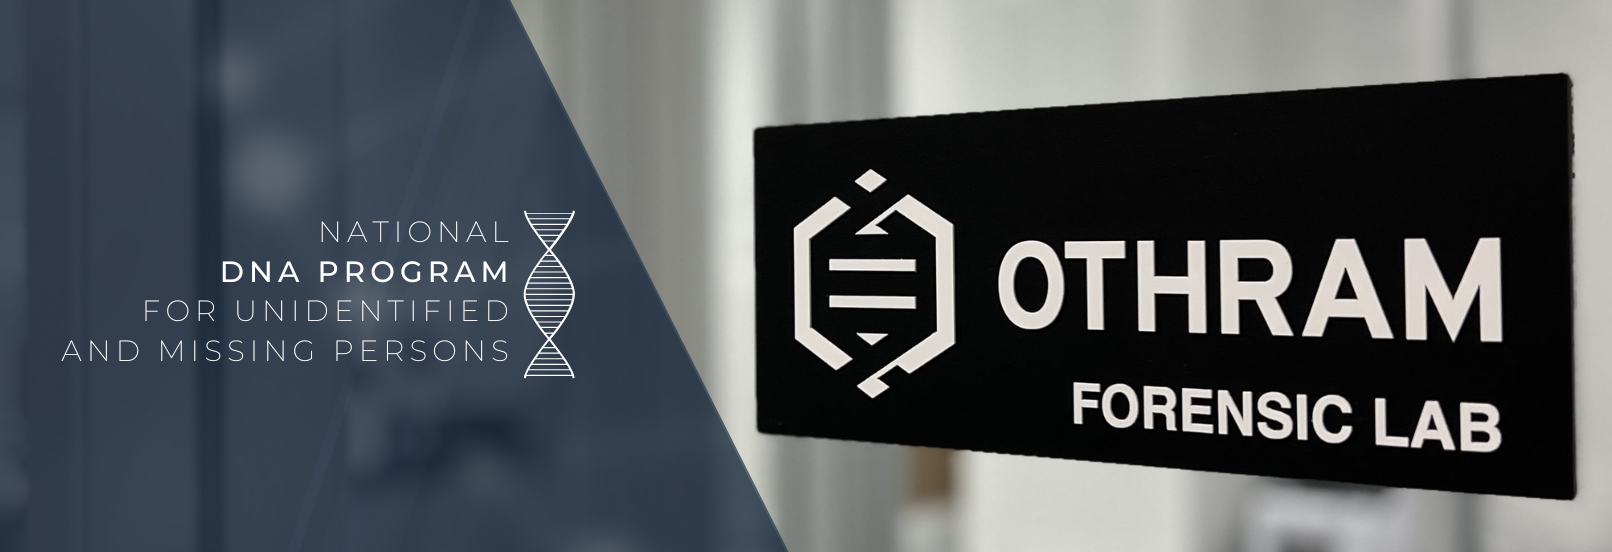 National DNA Program and Othram Partnership Logos